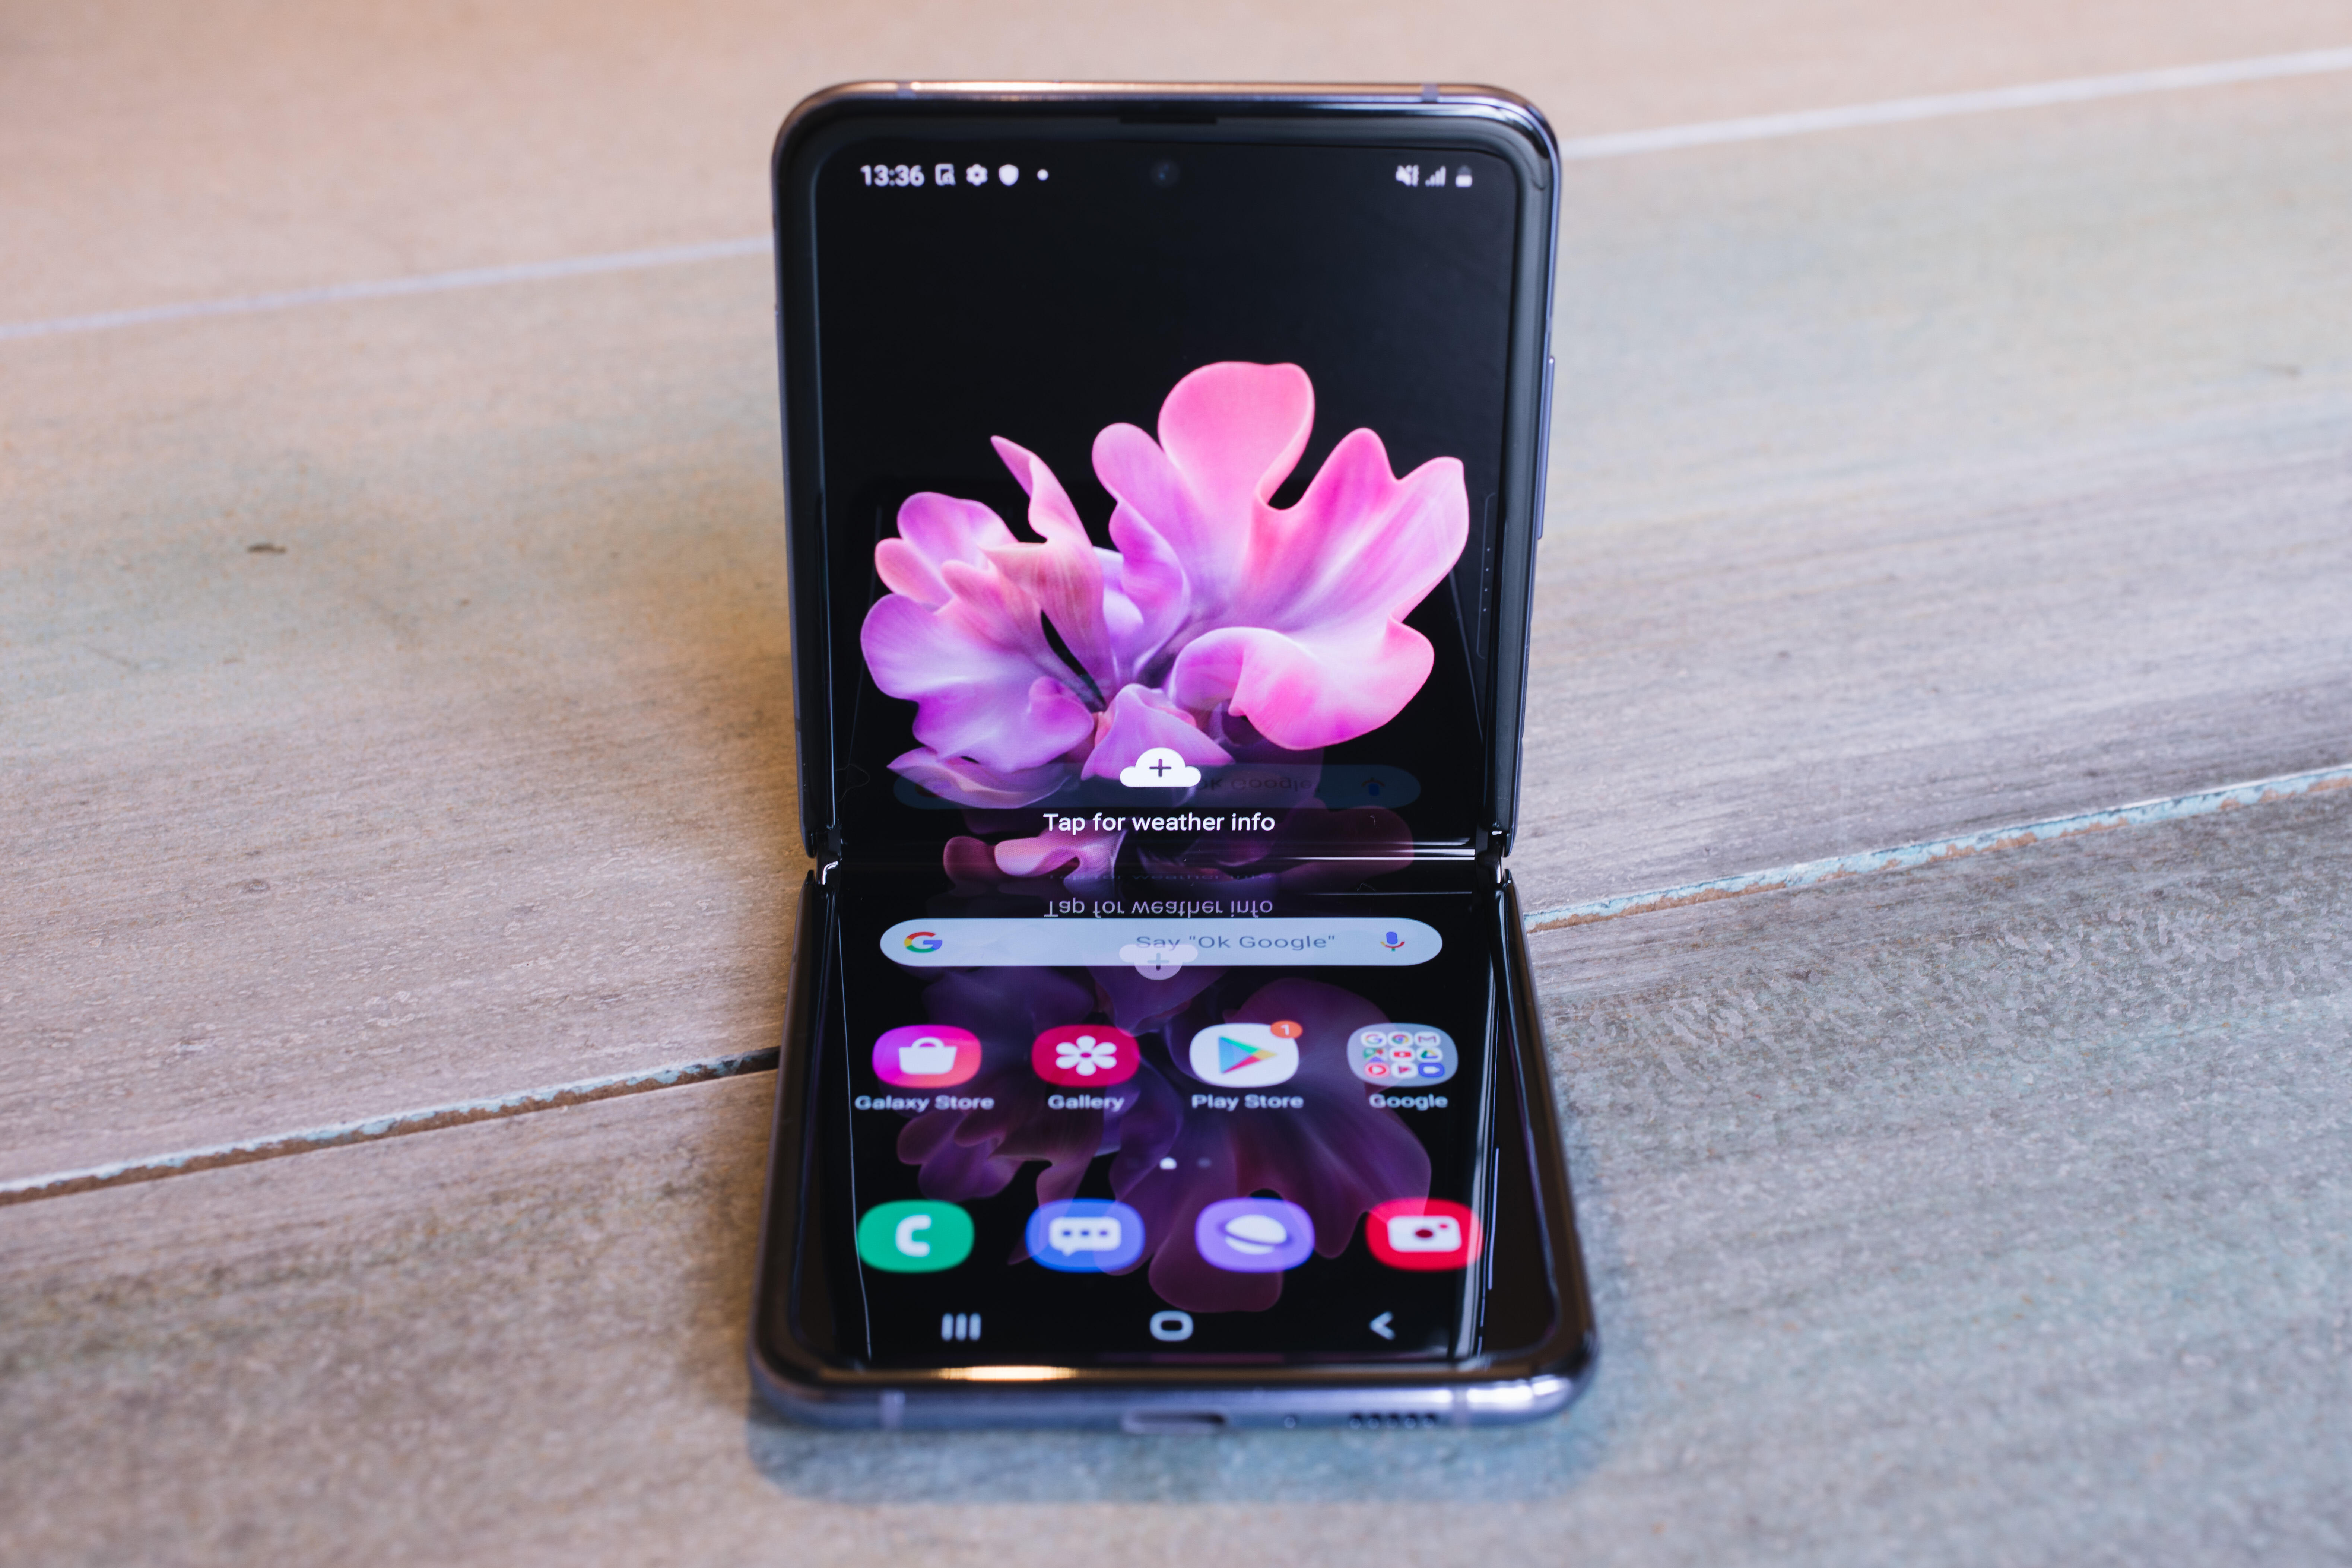 Samsung Galaxy aesthetic. Складной телефон Оппо Файн н1 флип. Самсунг раскладной новый с большим экраном цена. Фото андроид раскладушка 2020 года цена.